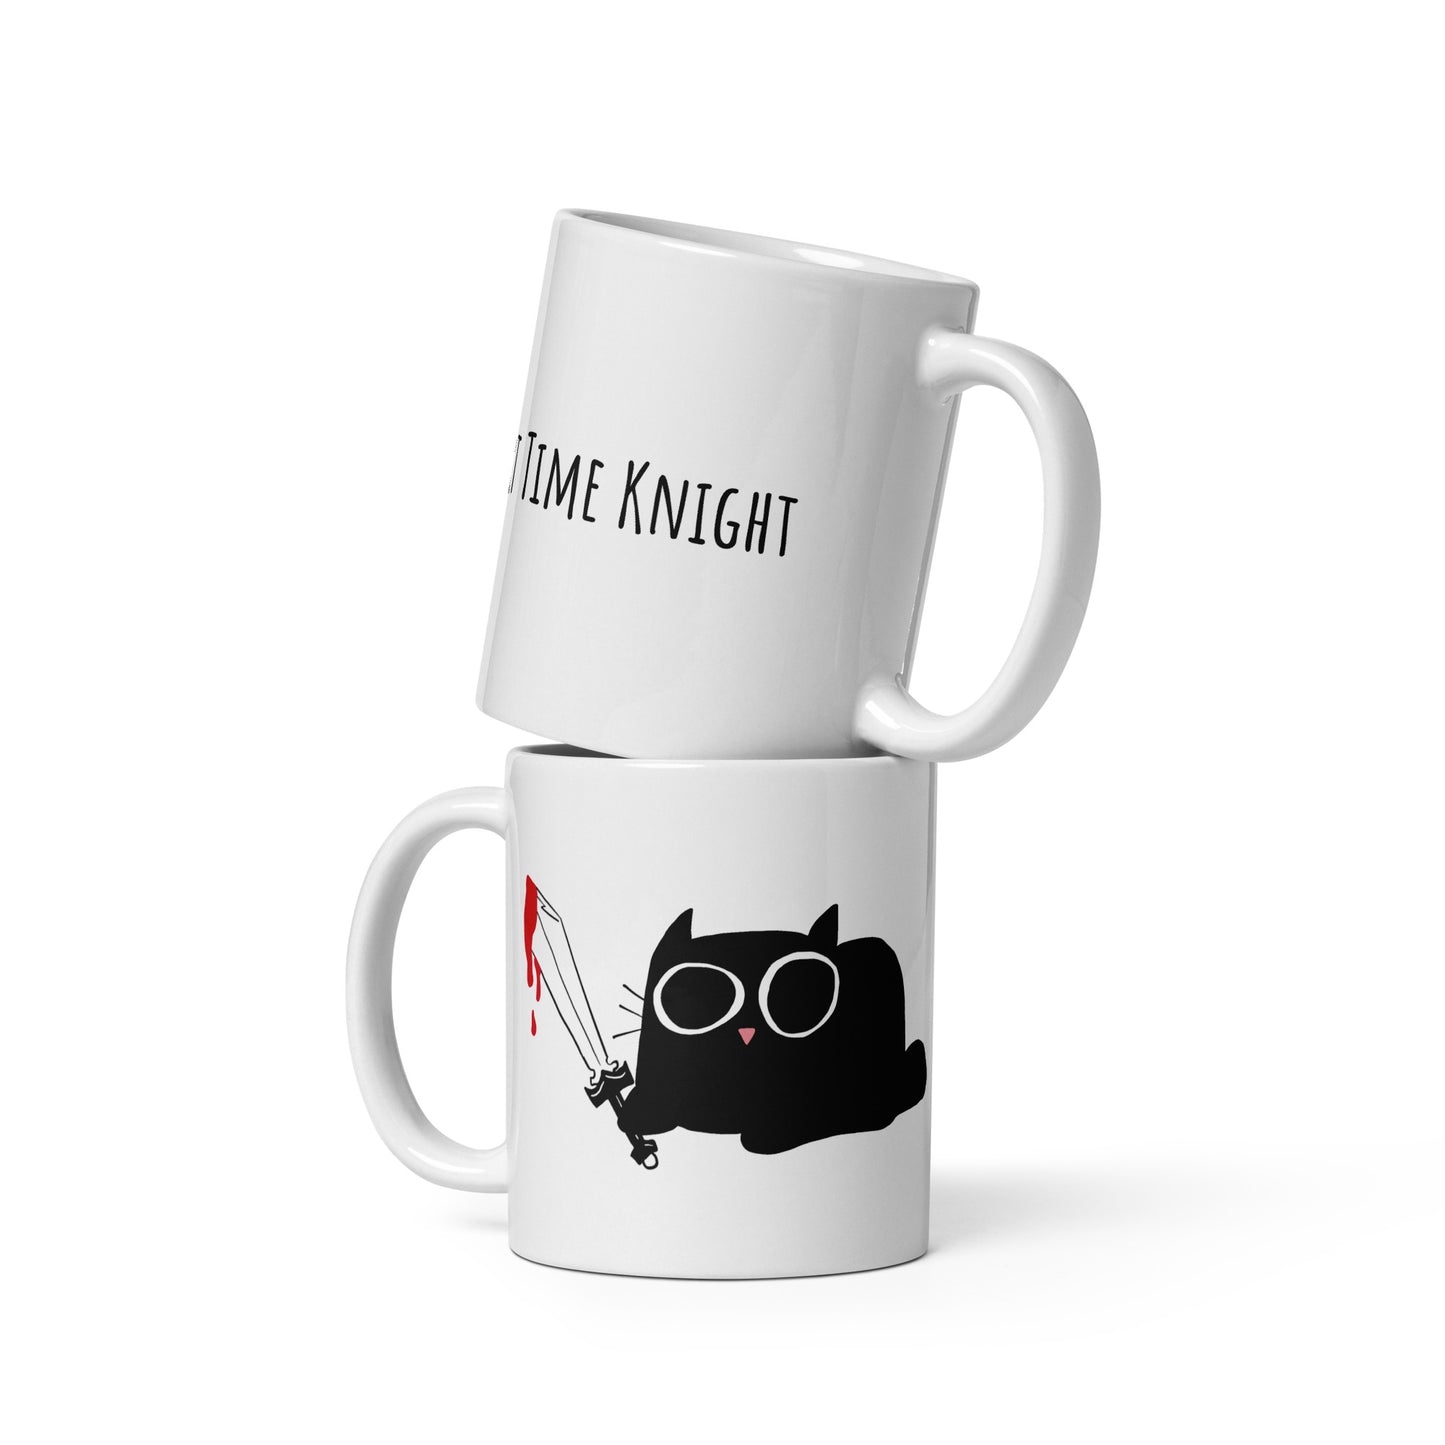 Part-Time Knight - White glossy mug